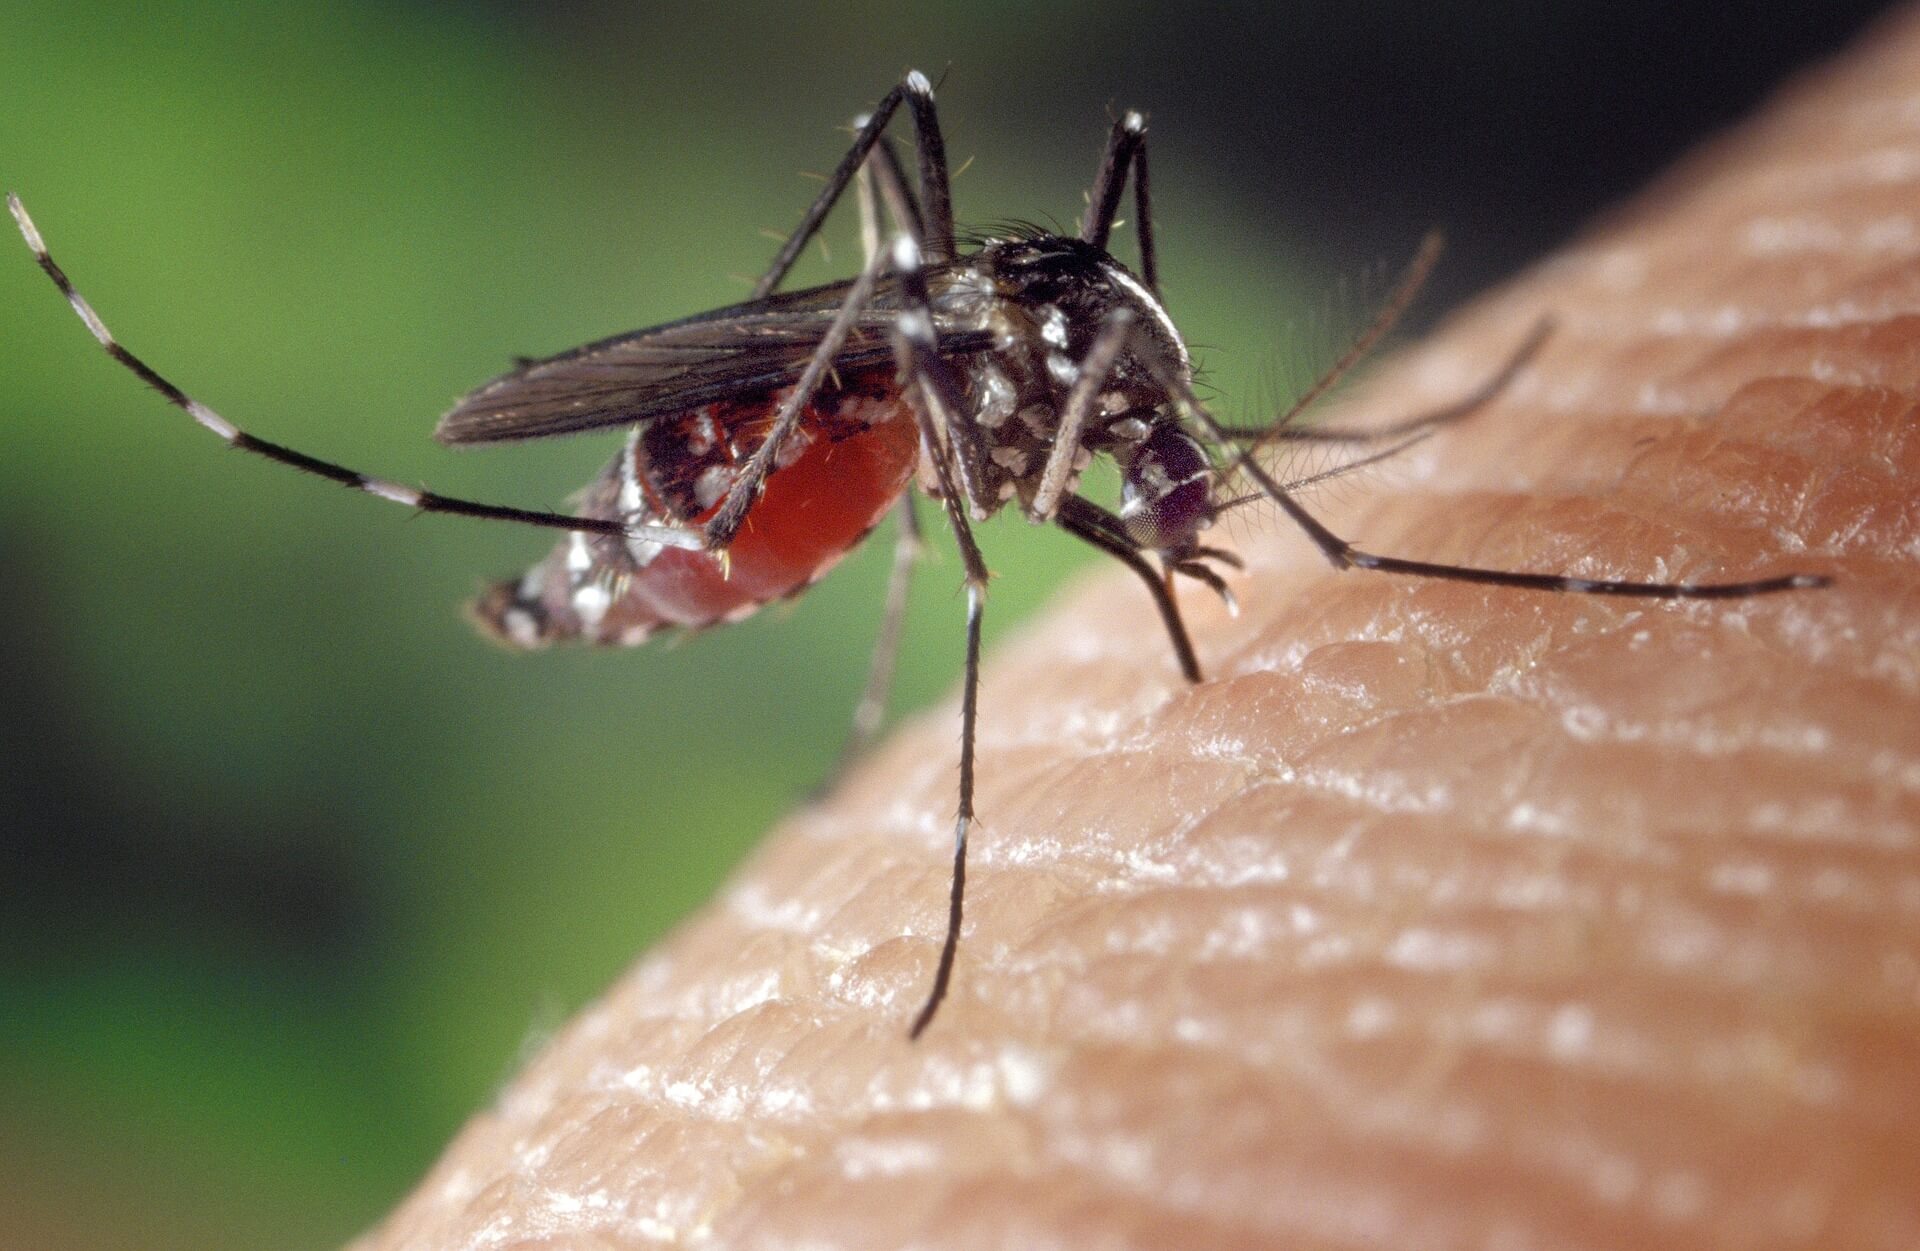 Geoengineering worsen the tropical malaria outbreak